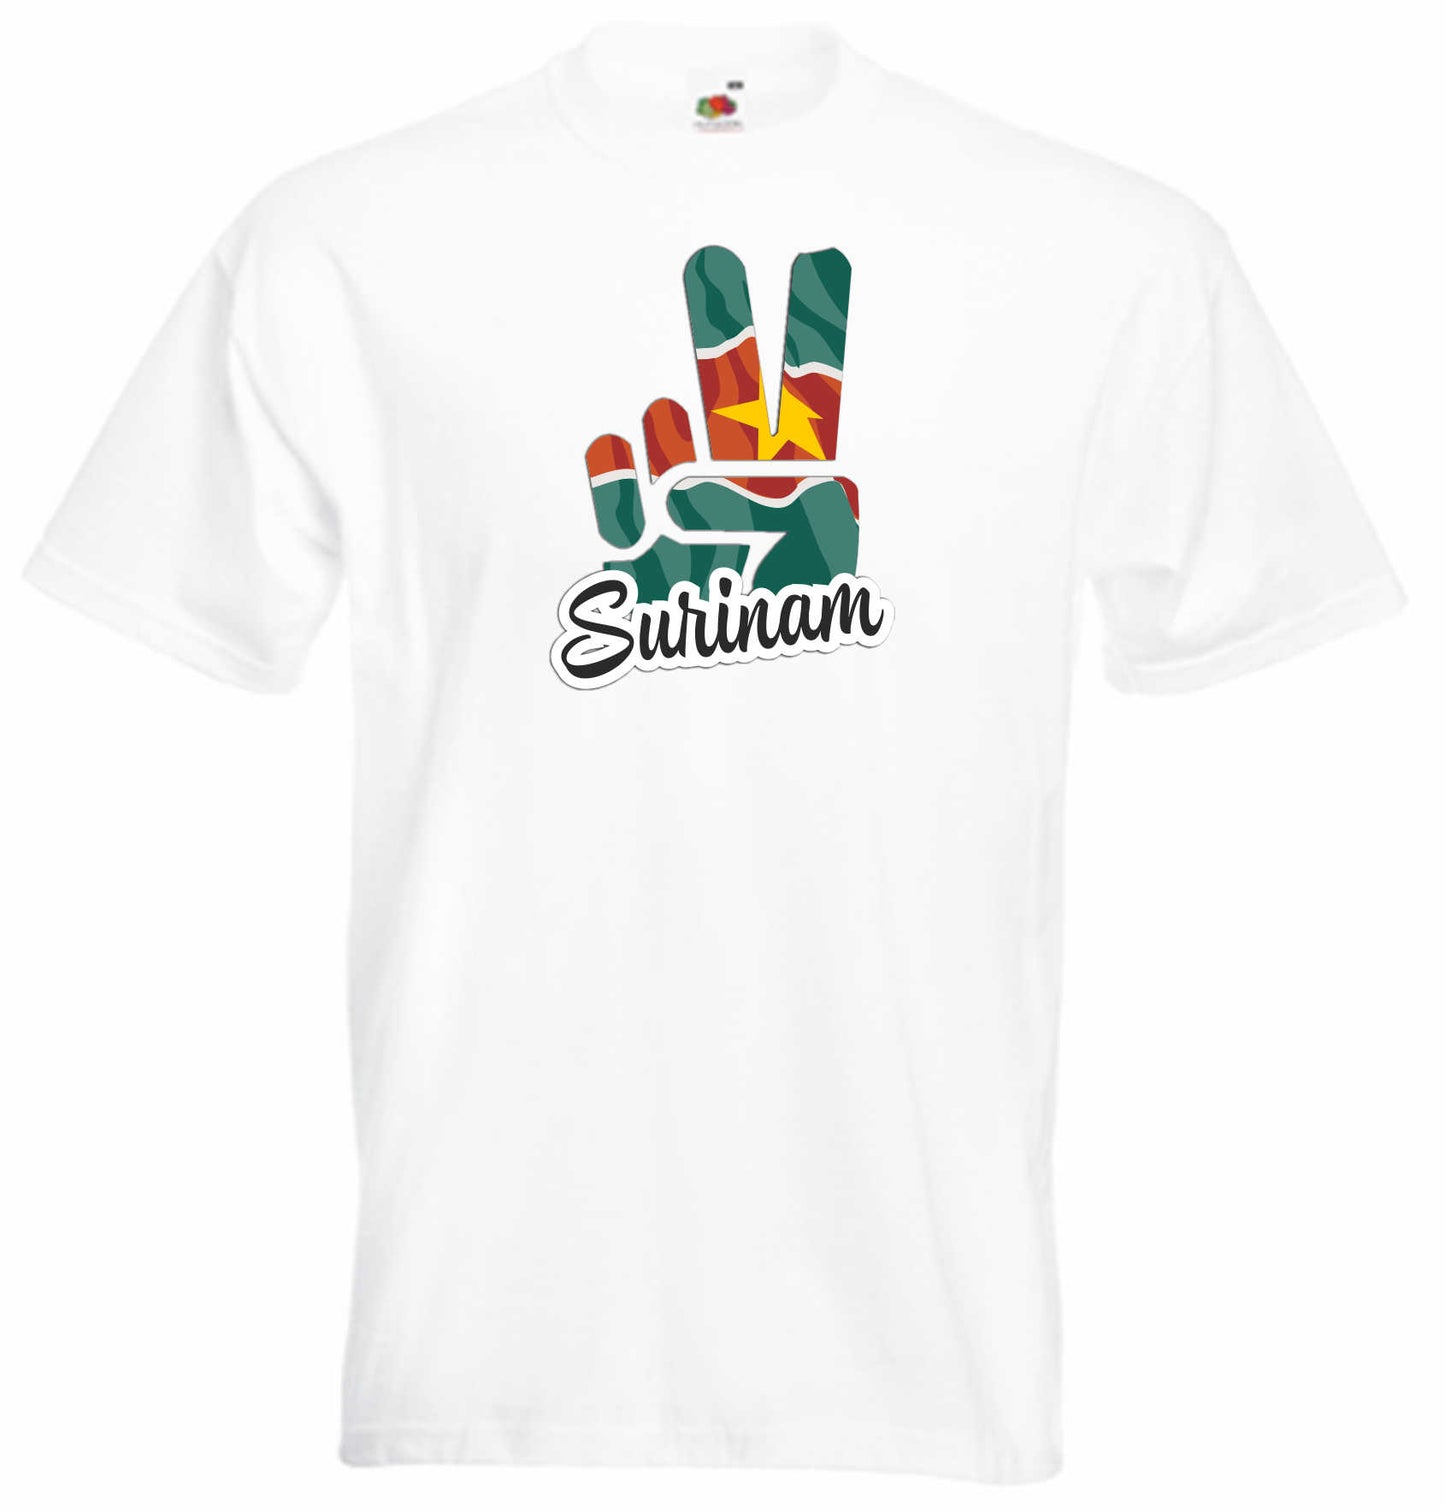 T-Shirt Herren - Victory - Flagge / Fahne - Surinam - Sieg